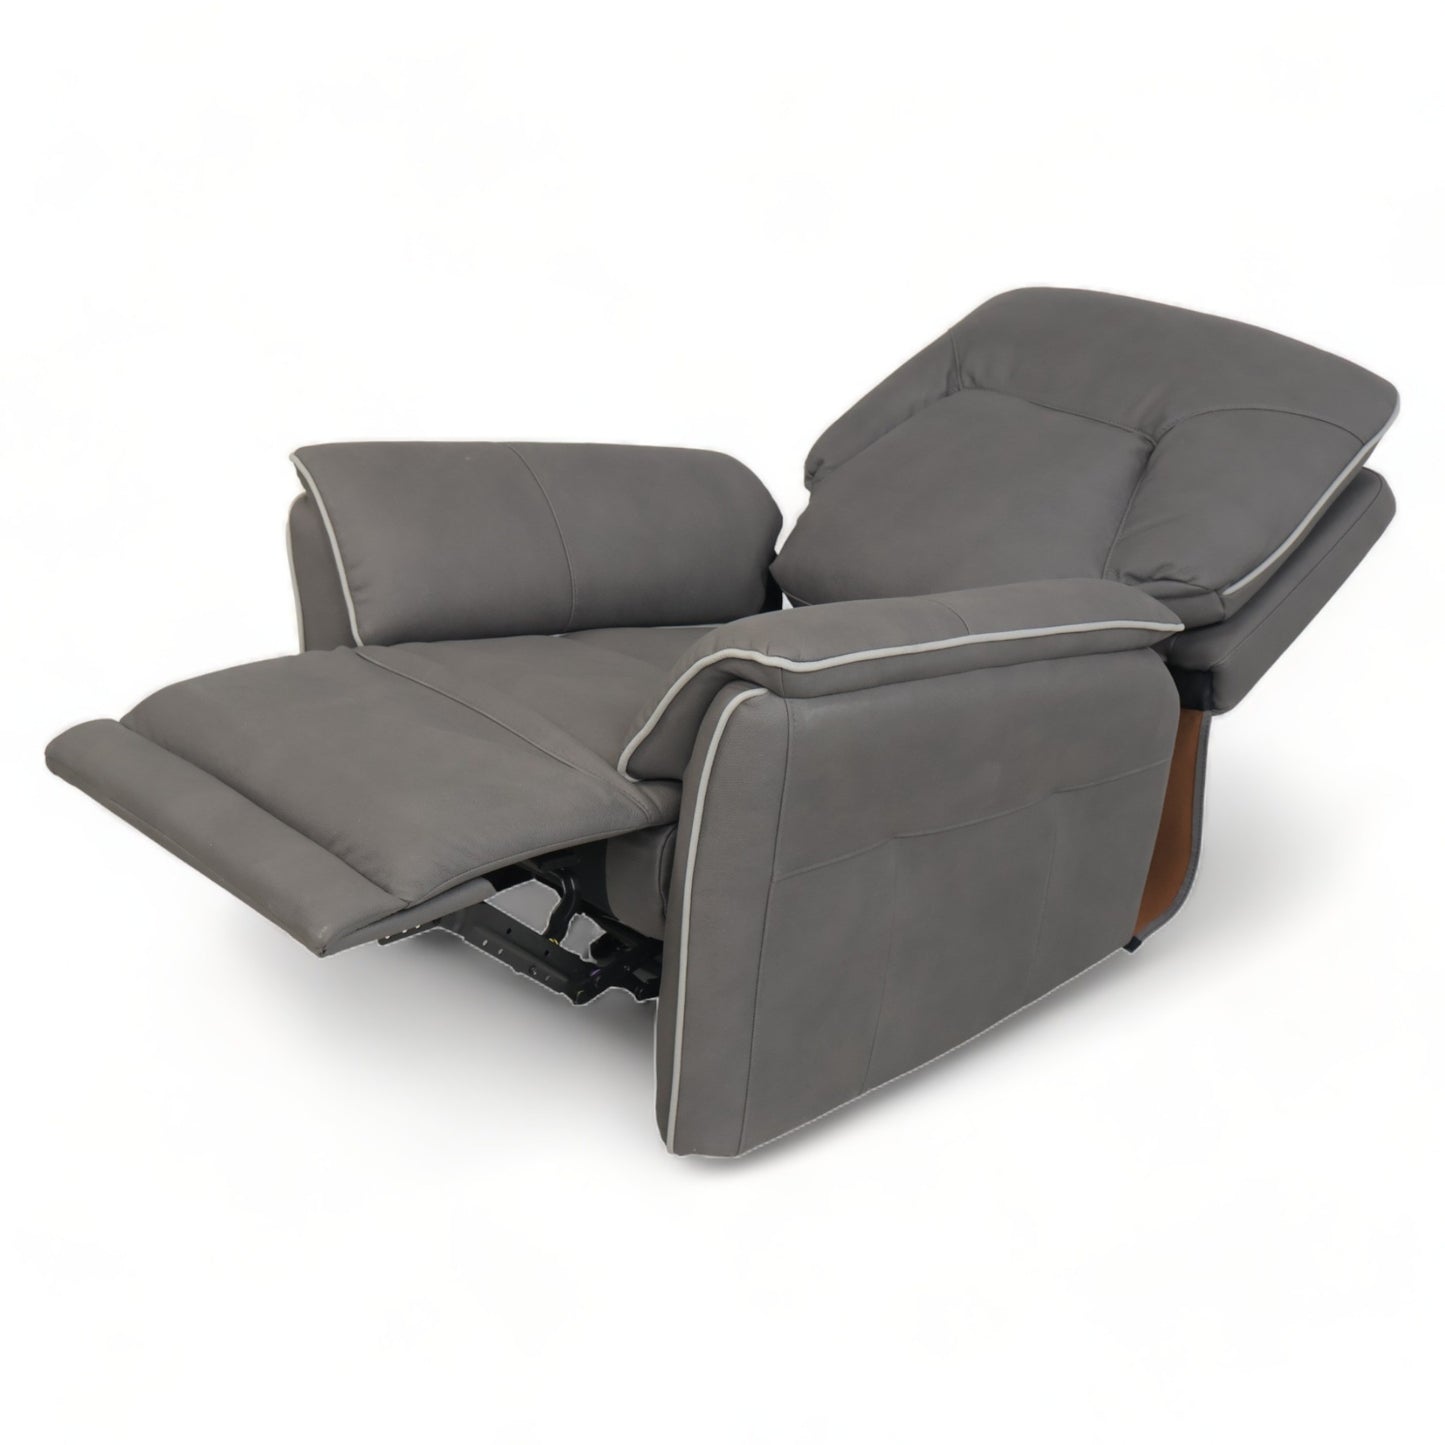 Nyrenset | Mørk grå stol med recliner